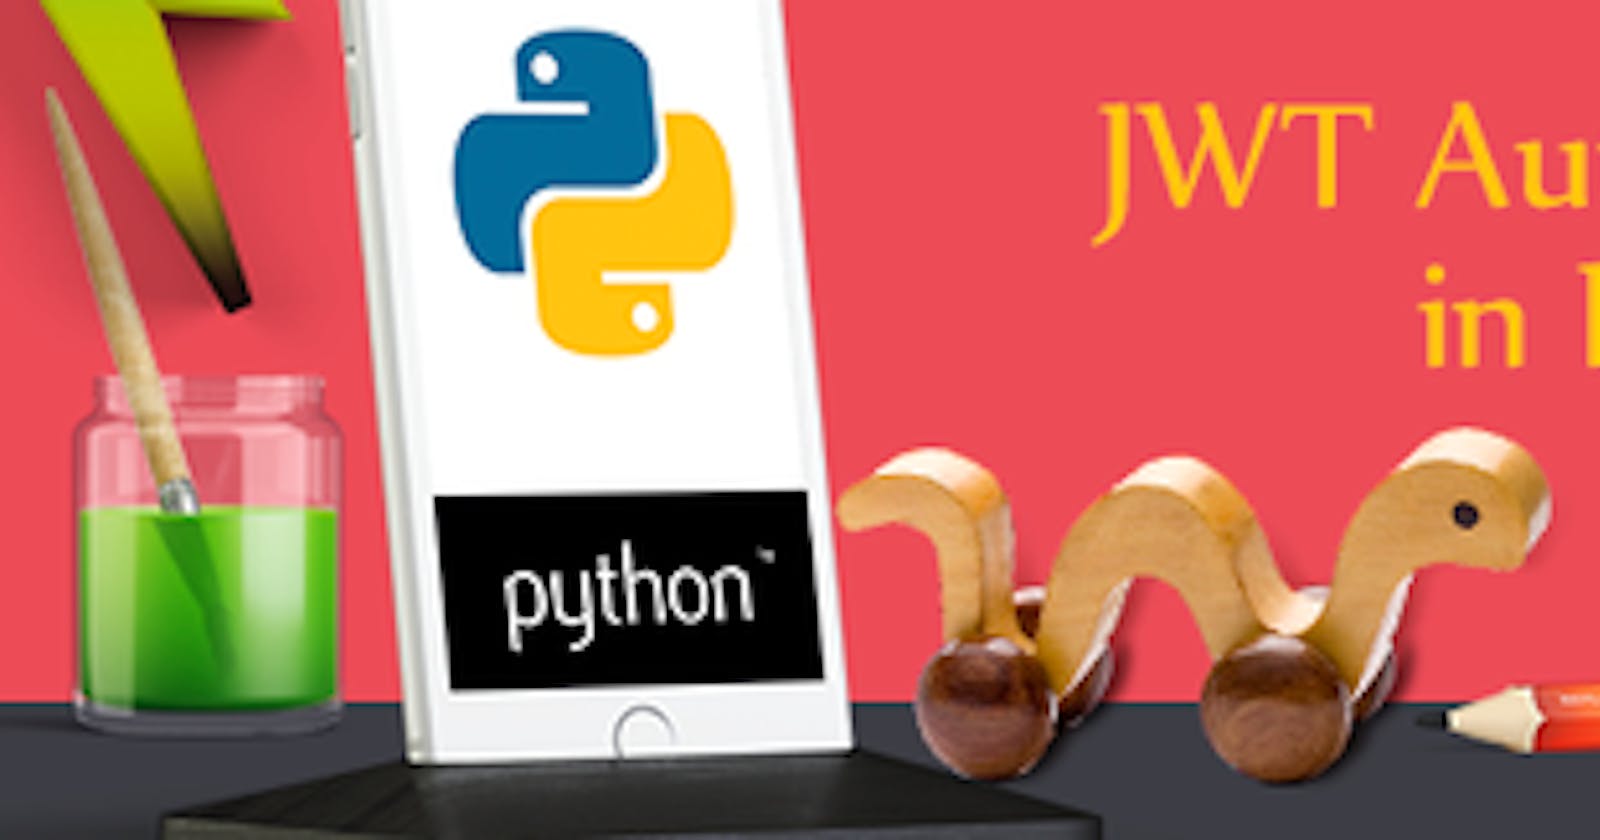 JWT authorization in Python, Part 1: Practice.